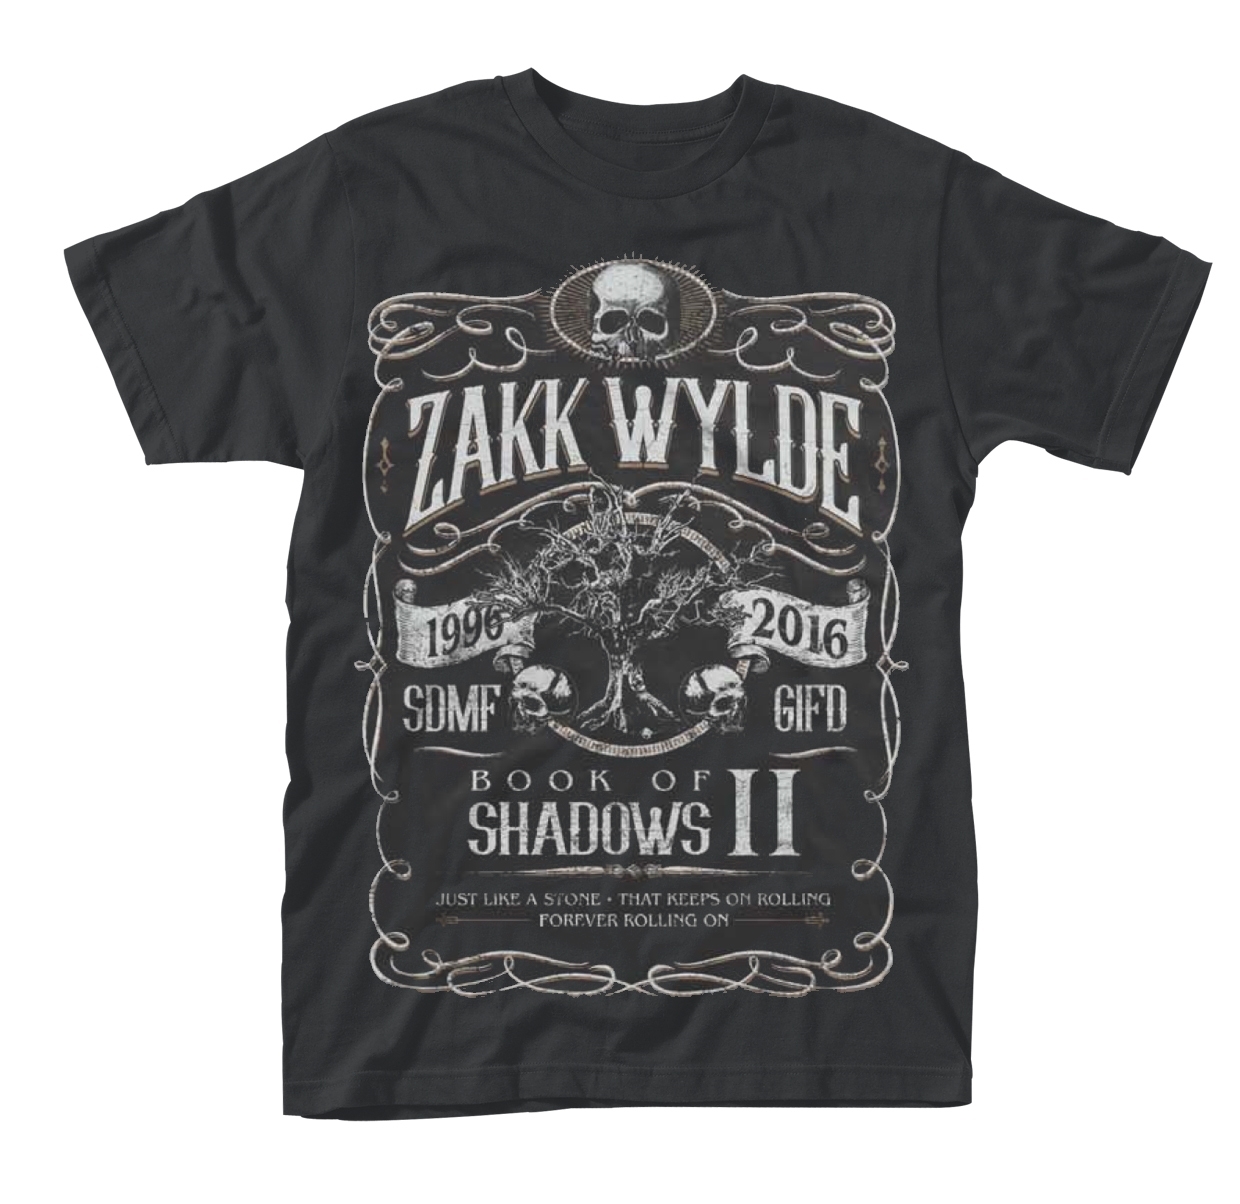 Zakk Wylde - Book Of Shadows 2 - T-Shirt - Music Megastore1240 x 1204